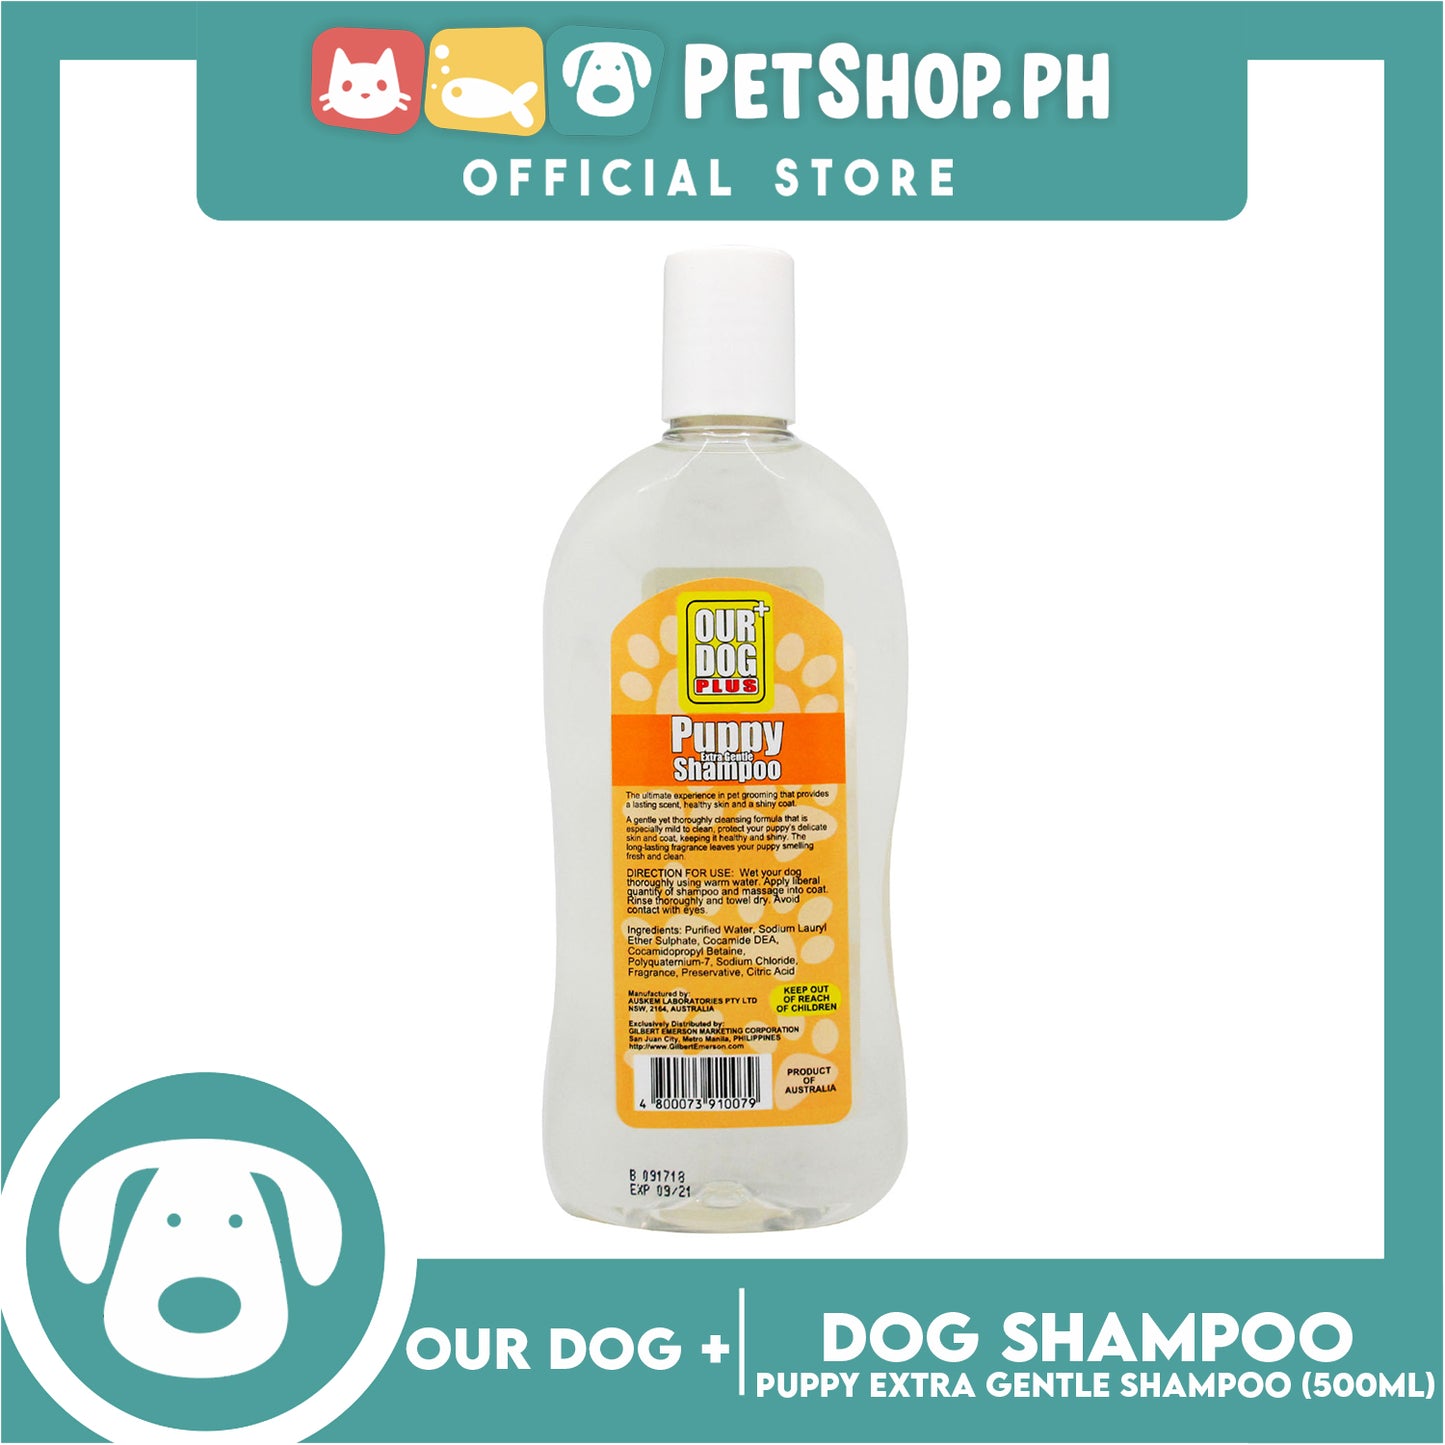 Our Dog Plus Puppy Extra Gentle Dog Shampoo 500ml